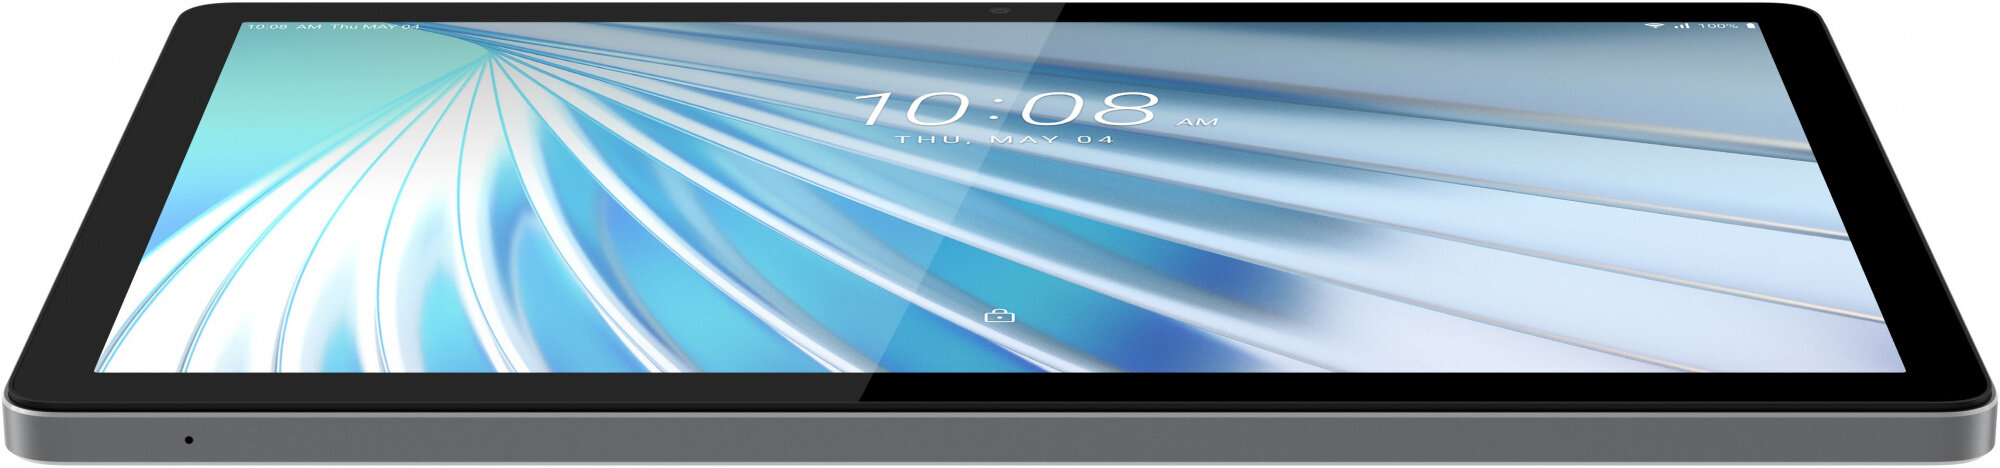 Планшет HTC A103 Plus edition 101" 4/64GB LTE Серый